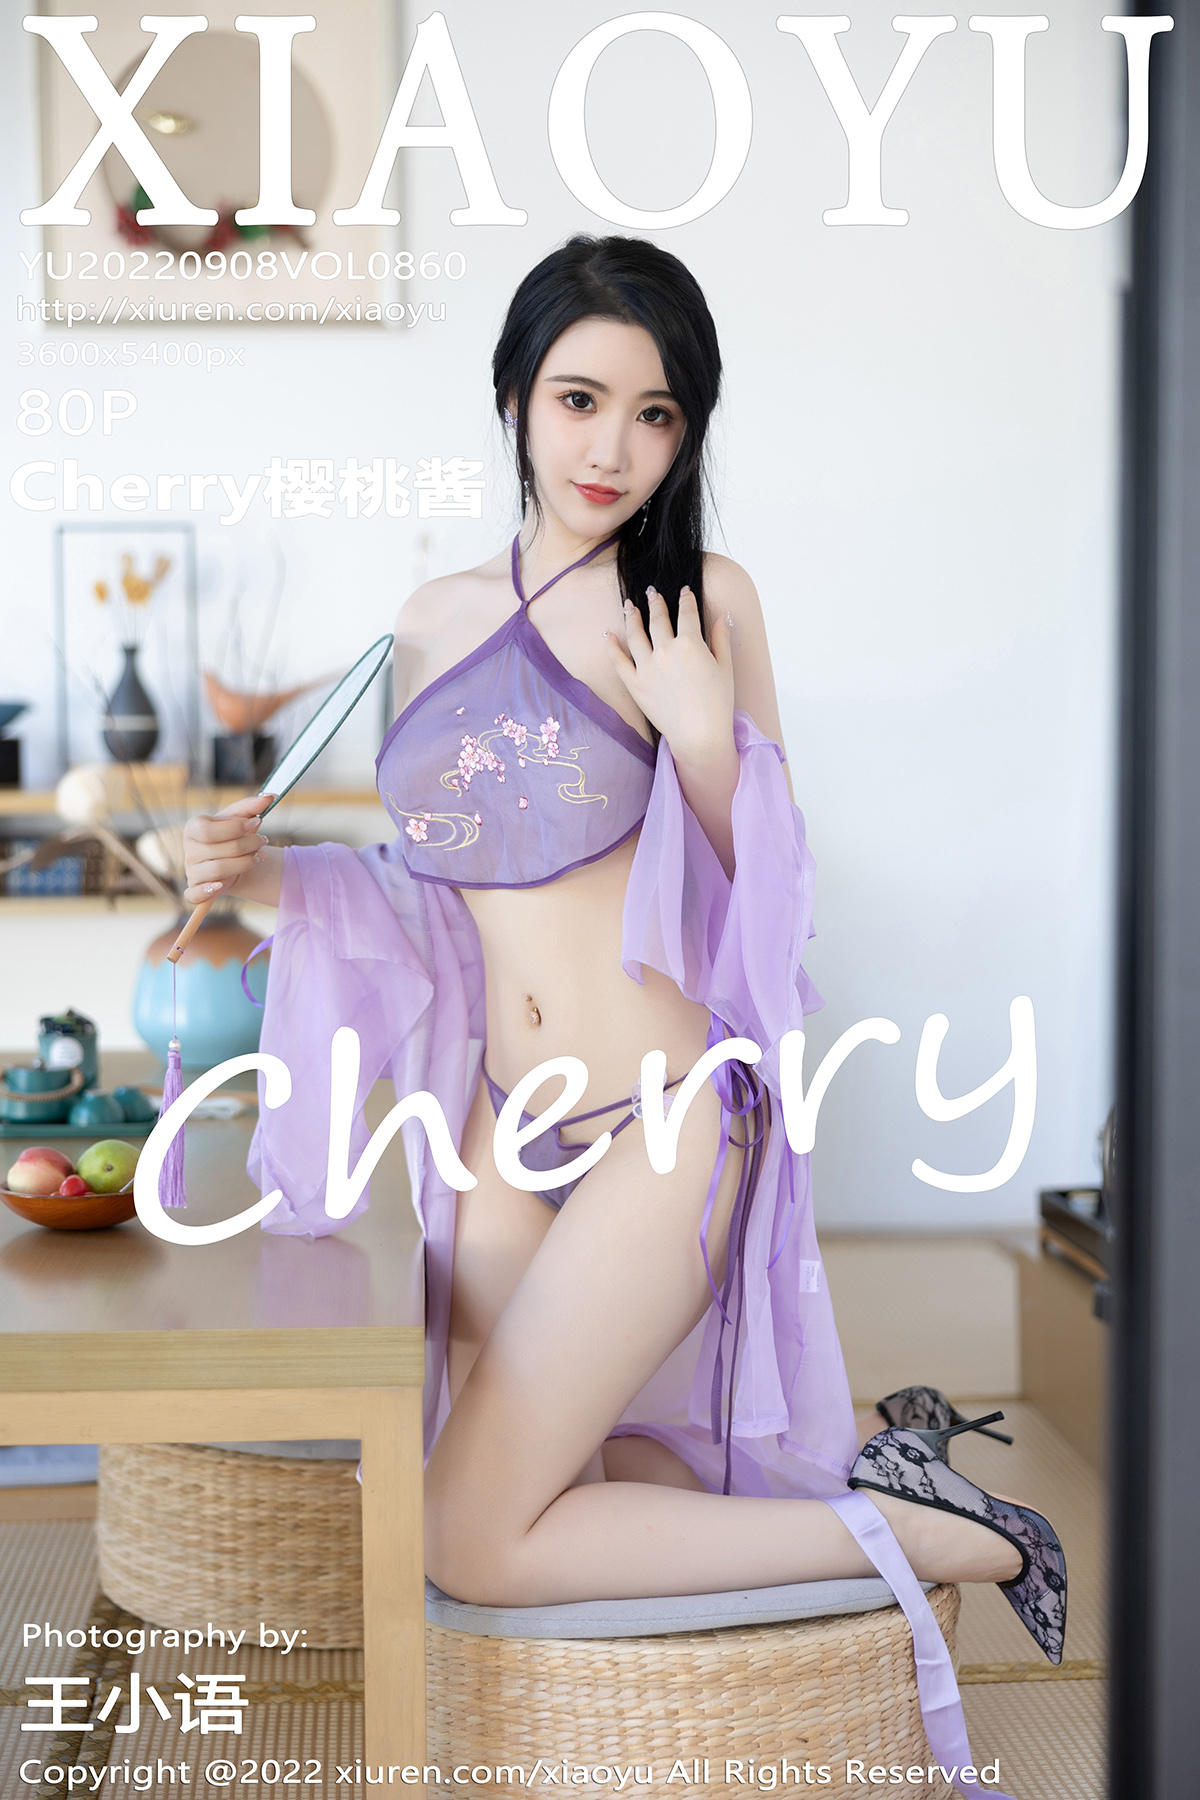 【XIAOYU語畫界】2022.09.08 Vol.860 Cherry櫻桃醬 完整版無水印寫真【80P】 - 貼圖 - 清涼寫真 -